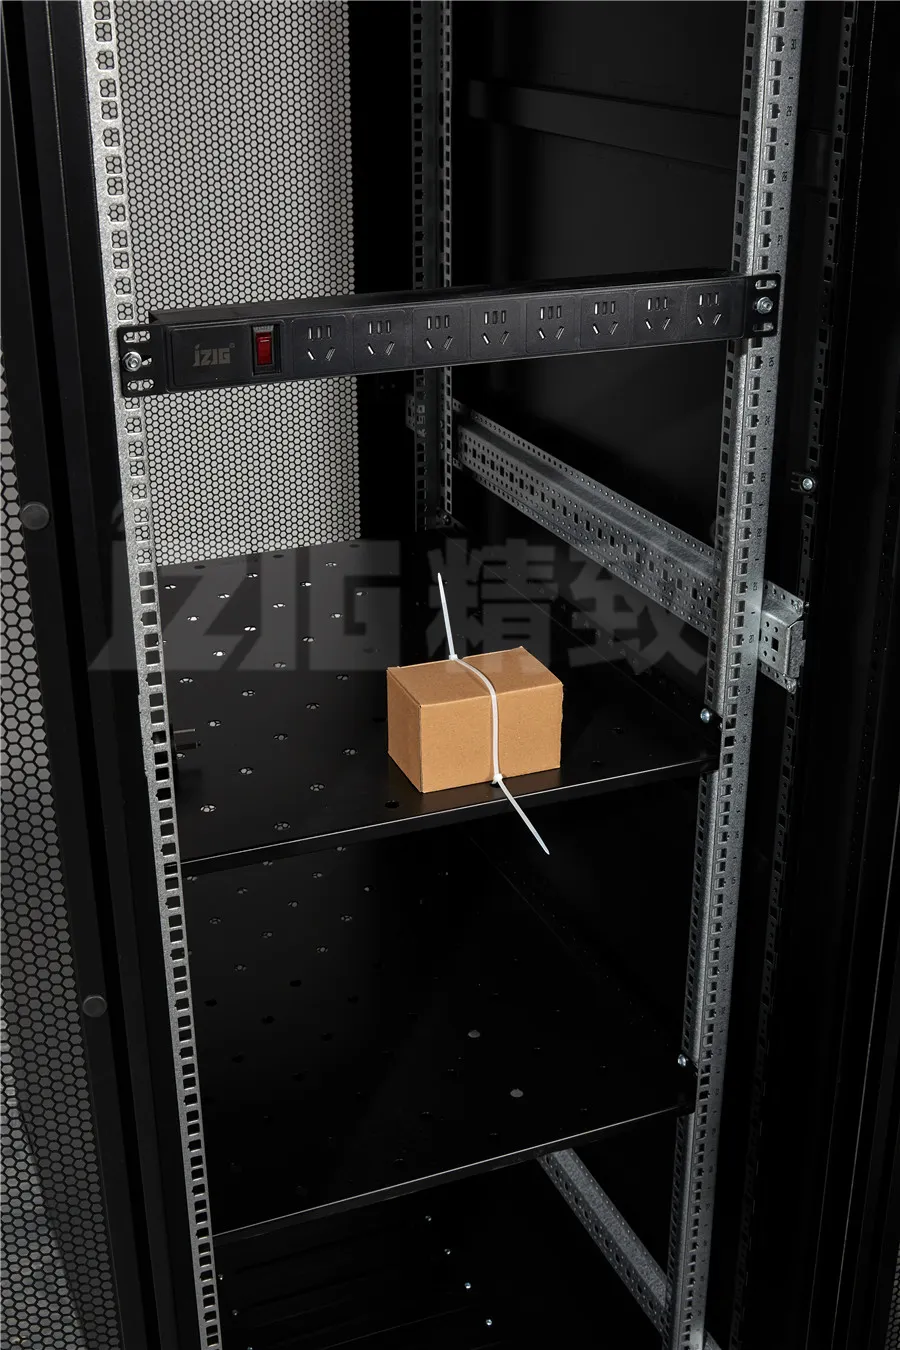 42u 600*800 Server Rack Enclosure Server Cabinet Data Center